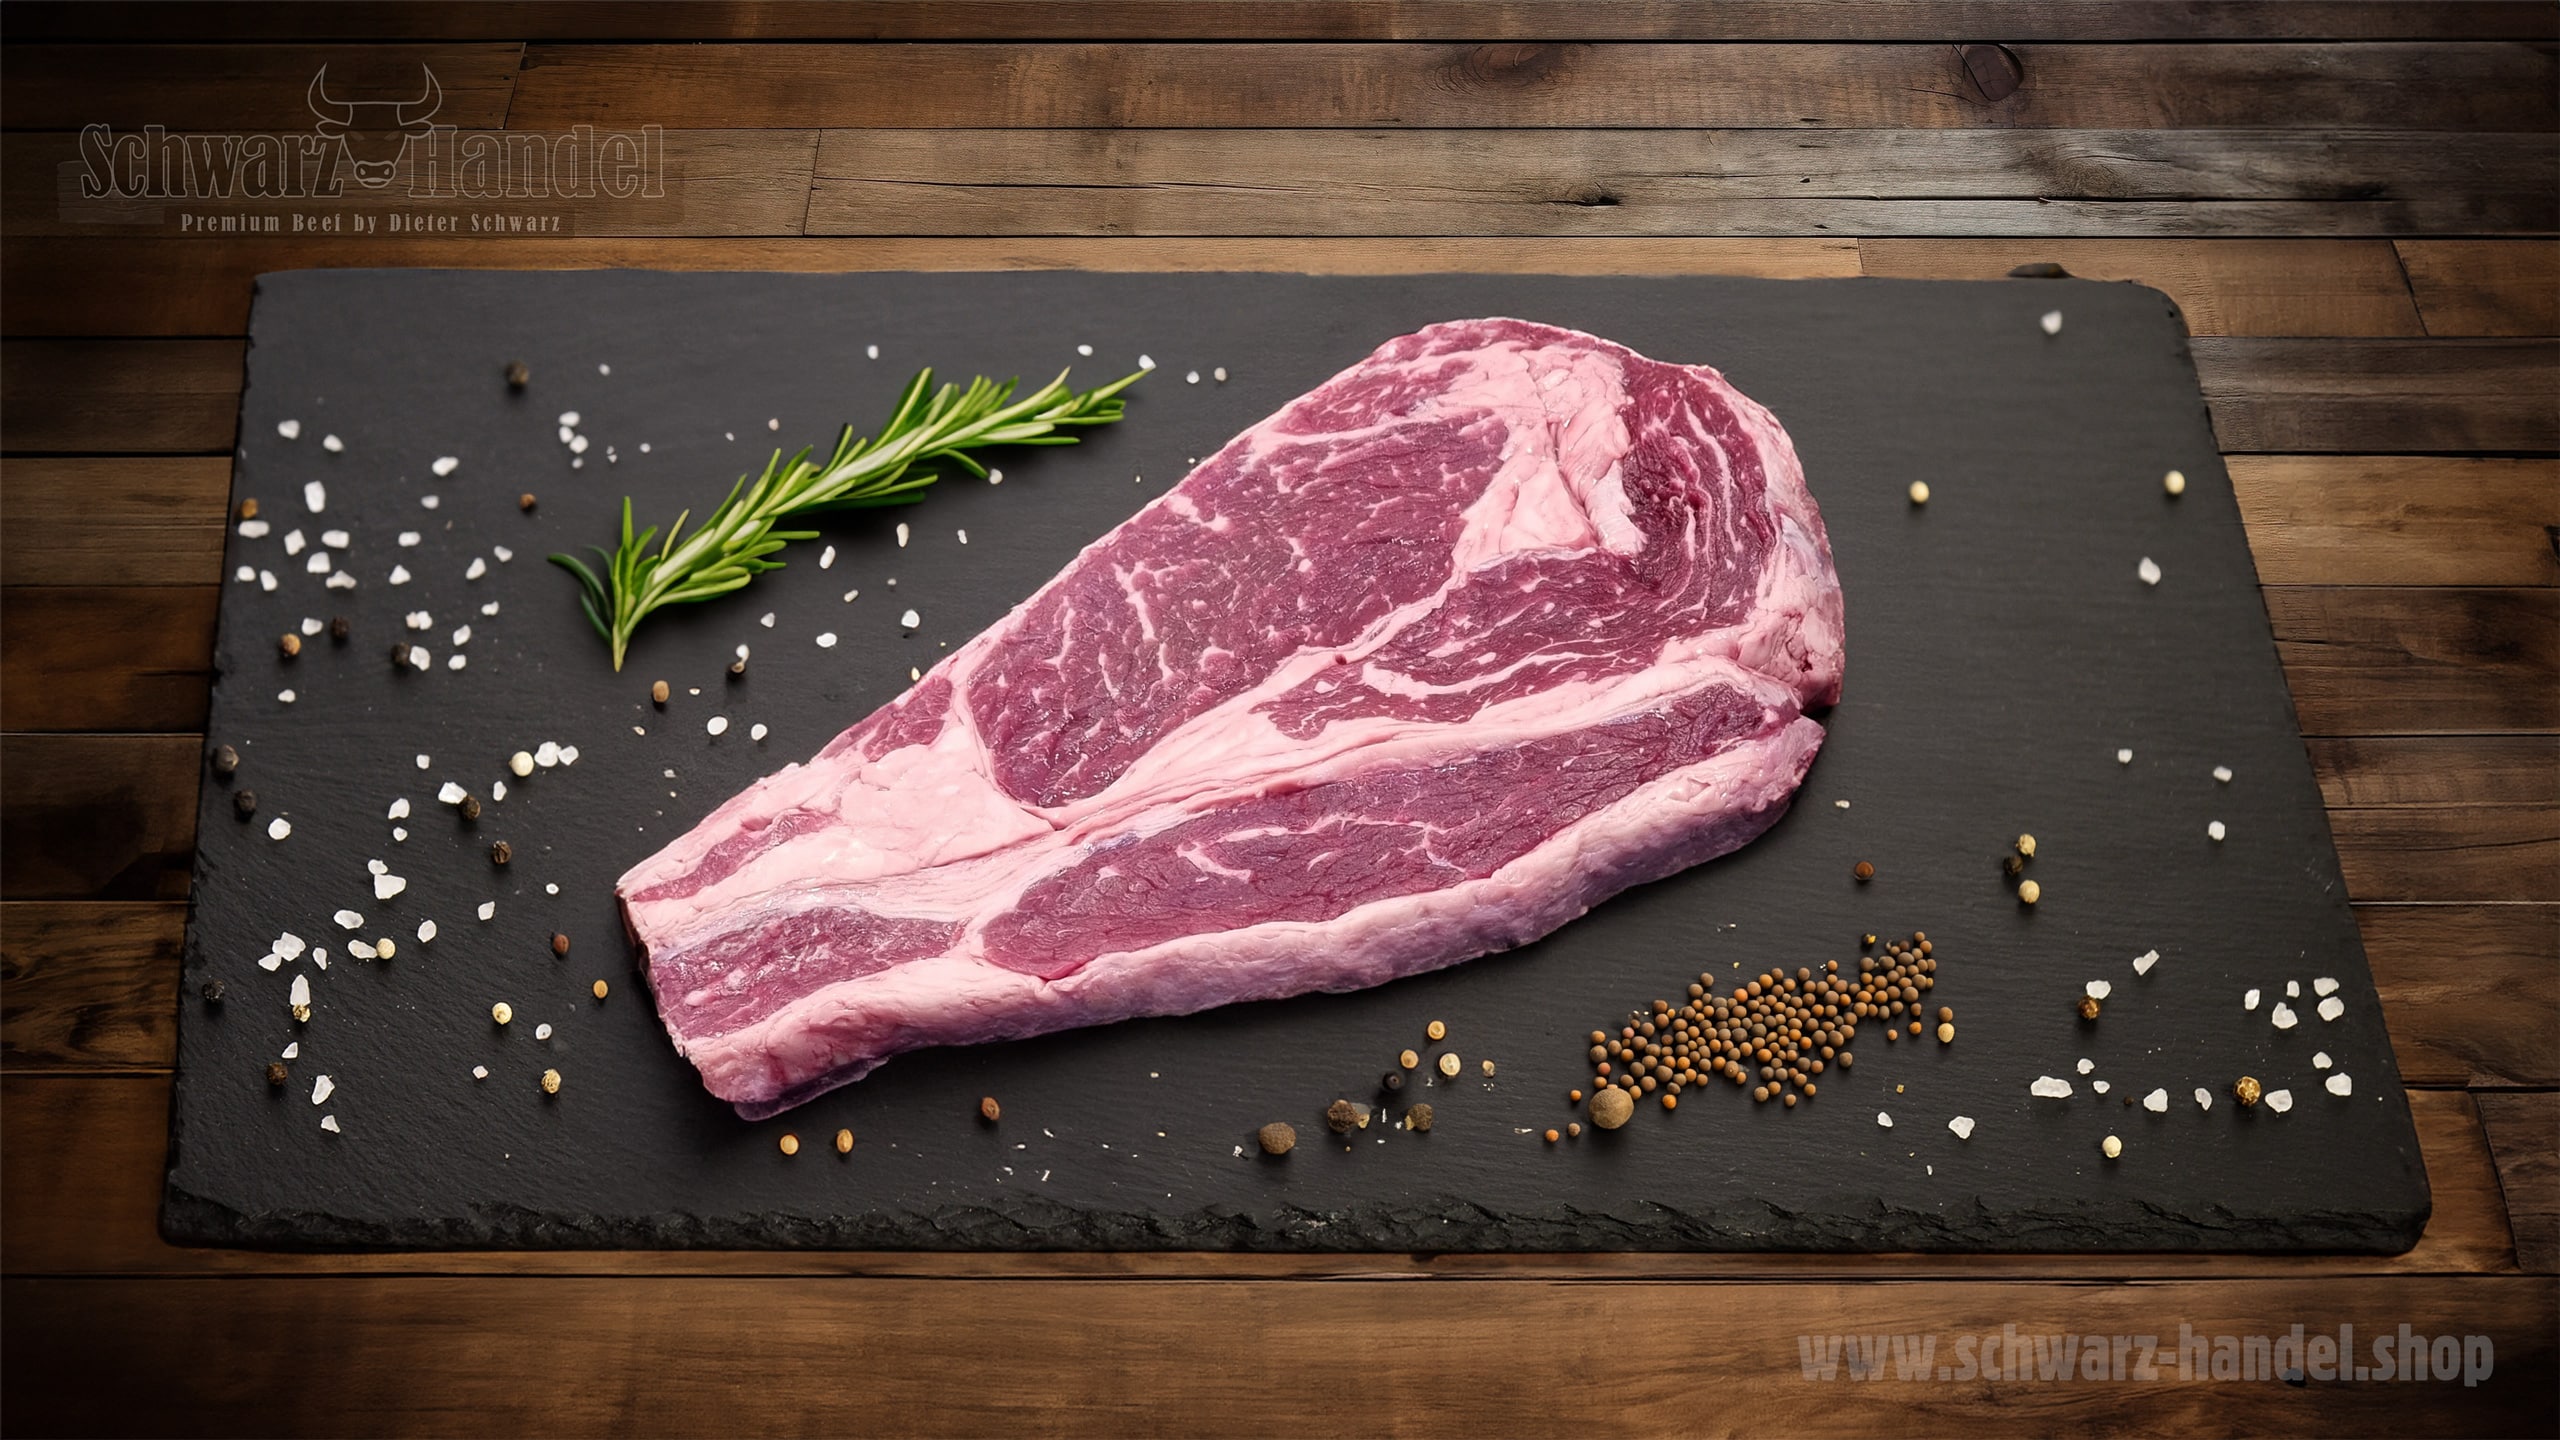 Western-Steak Entrecôte mit Deckel SchwarzHandel Rindfleisch Rindfleischprodukte Rindfleischprodukt Rindfleischerzeugnisse Rindfleischerzeugnis Beef BeefStore Premiumbeef Premium Beef